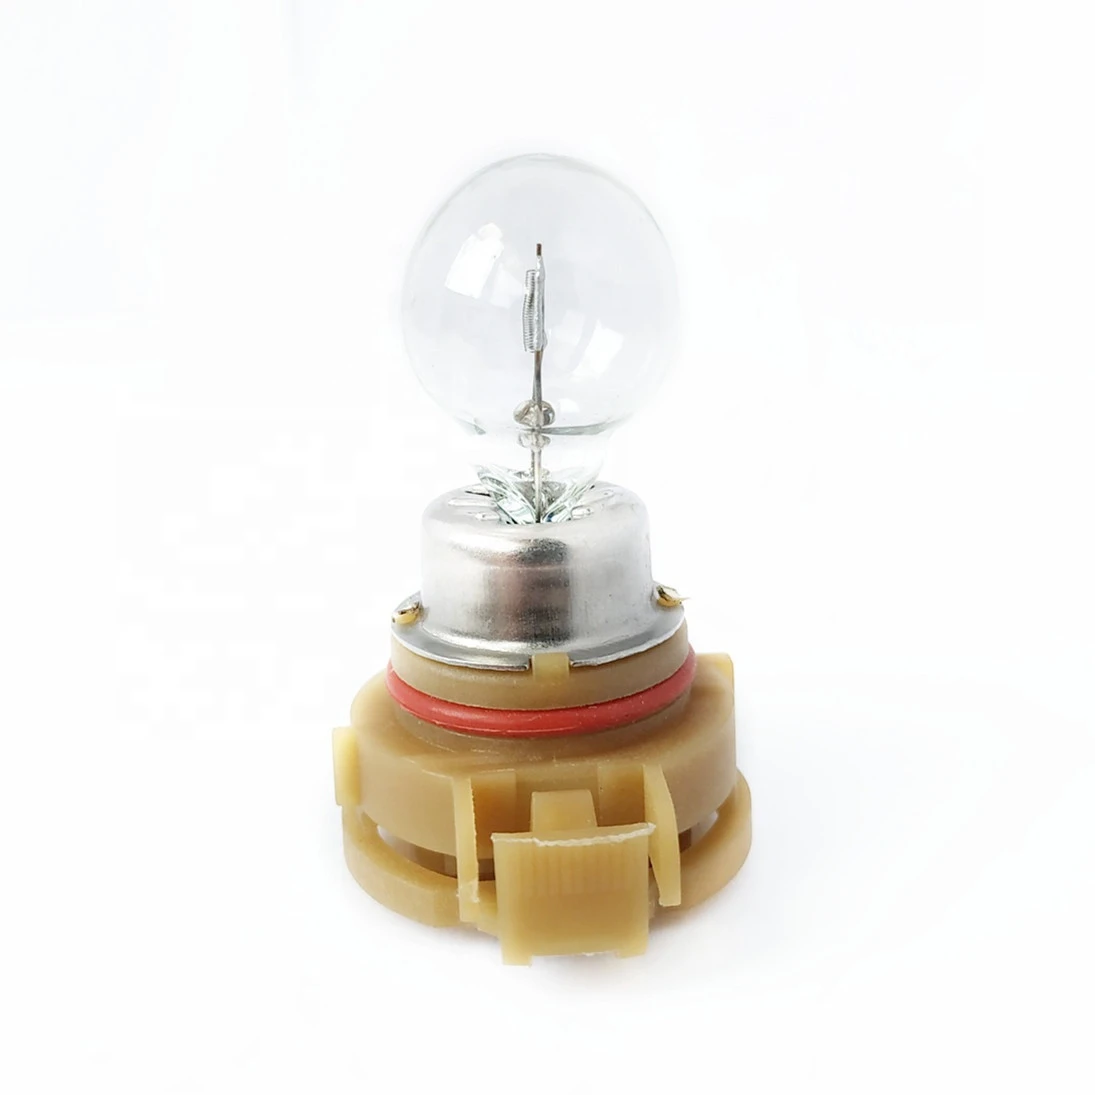 Premium PSX24W 12V 24W 12276 PG20-7 2504 Incandescent Bulb Base 358107841Standard Fog Lamp Globe H16 Standard Headlight